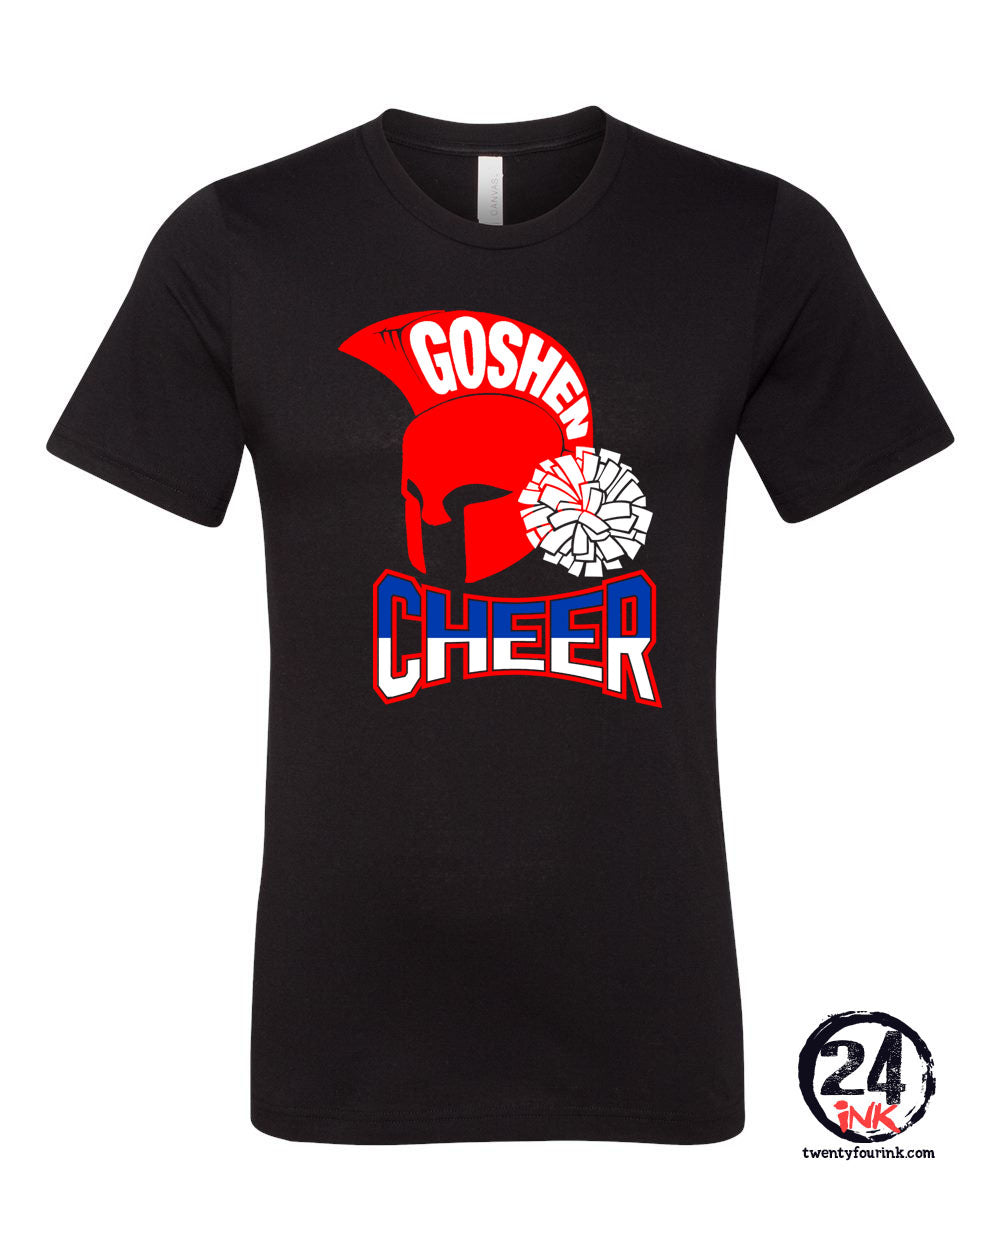 Goshen Cheer Design 8 T-Shirt